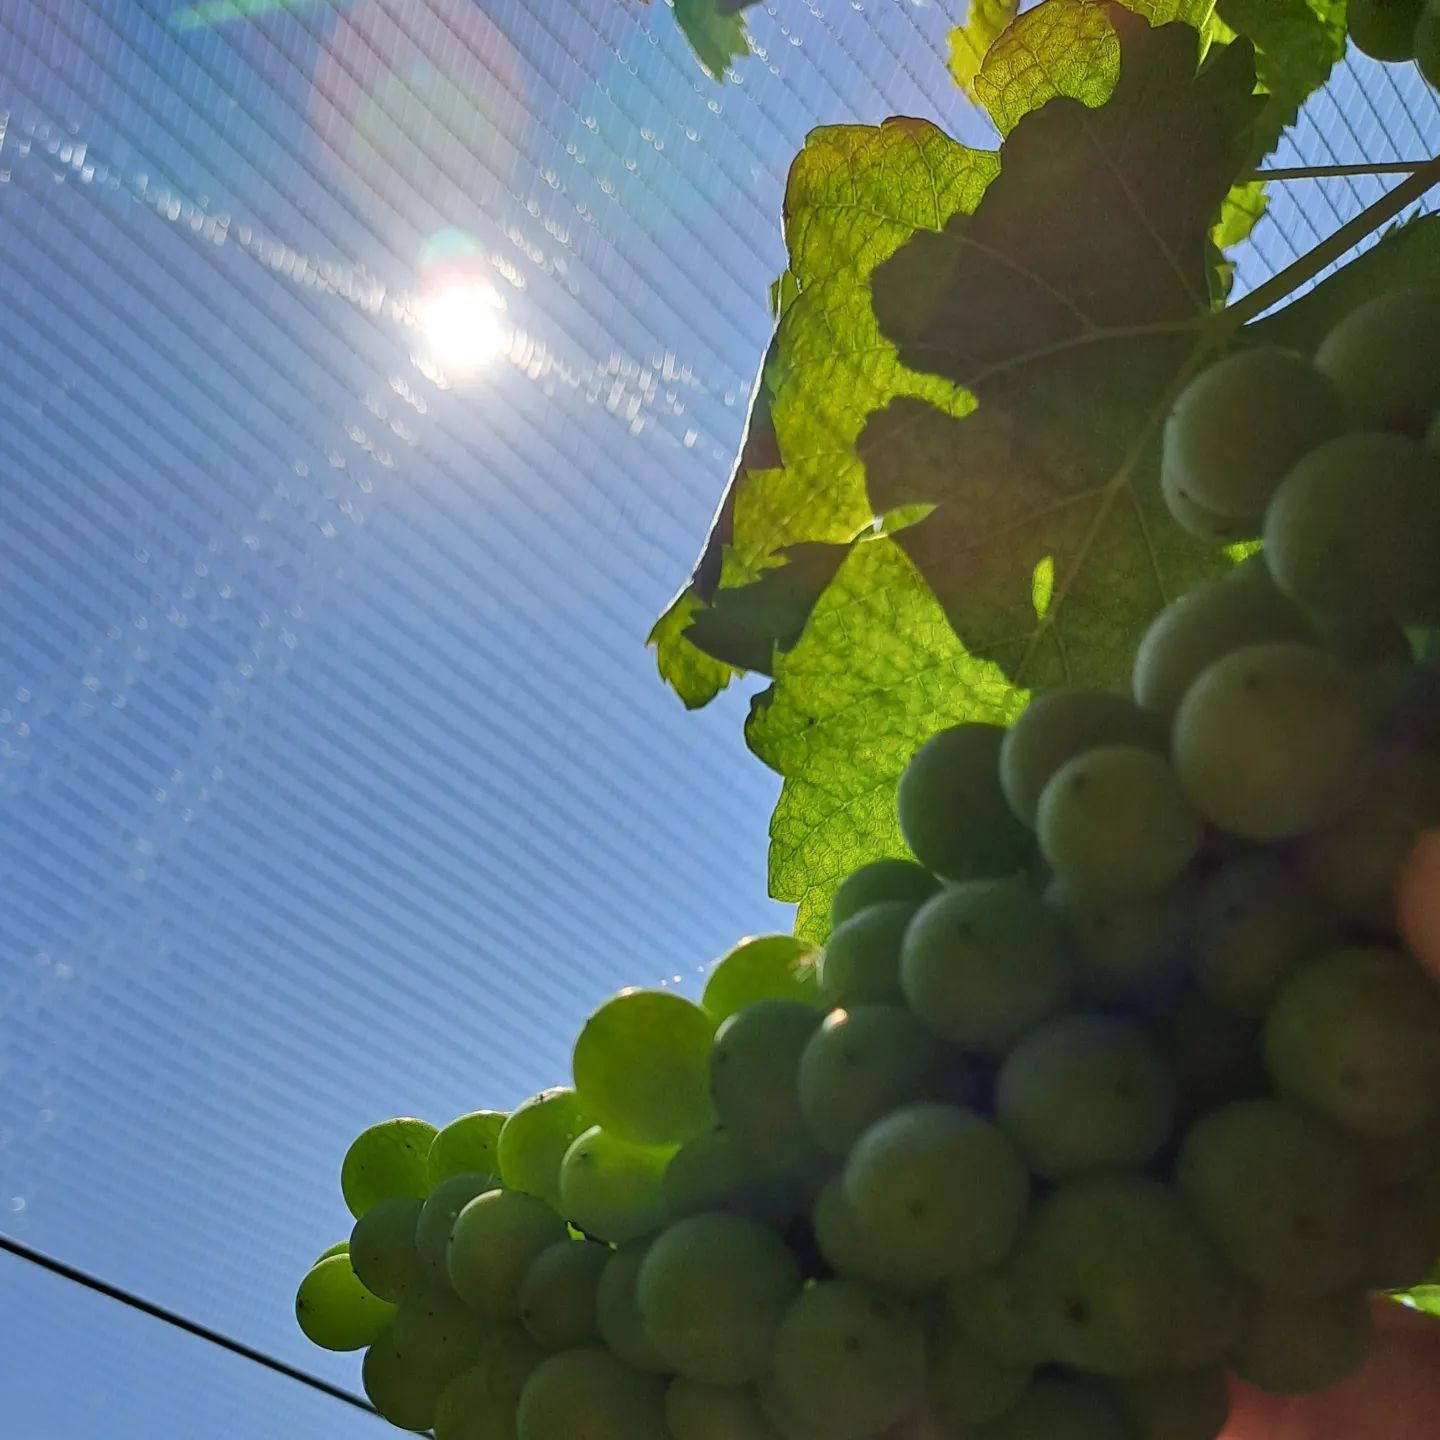 #summer #summervibes #erbalucedicaluso #erbaluce #canavese #winefotography #wineblogger #winelover #piedmont #piemonte #moncrivello #italy🇮🇹 #italia #piemont #italie #italien #ピエモンテ #イタリア #vercellese #vercelli #italy #moncravel